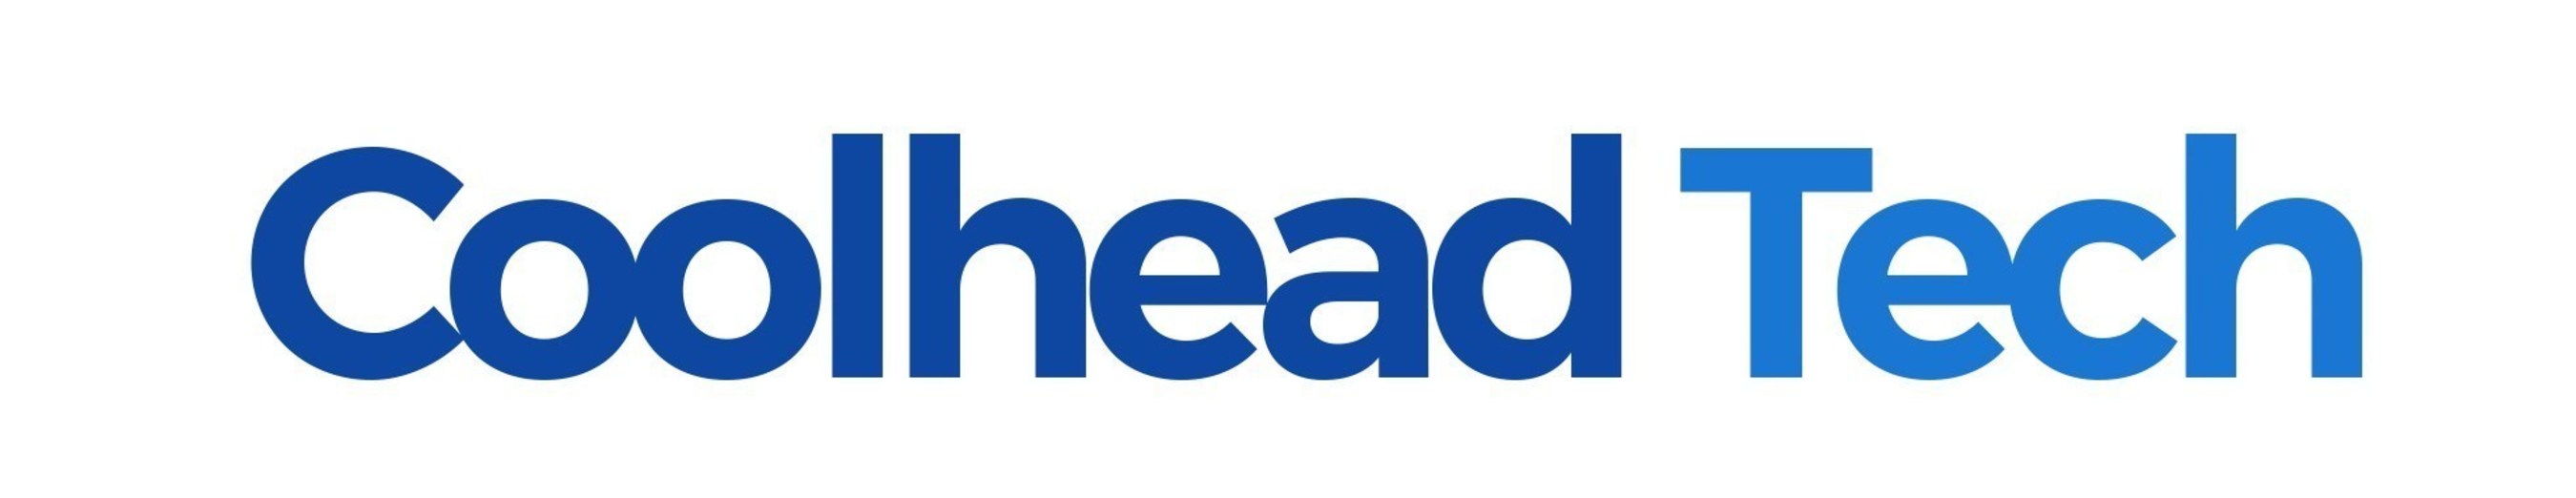 Coolhead Tech Logo